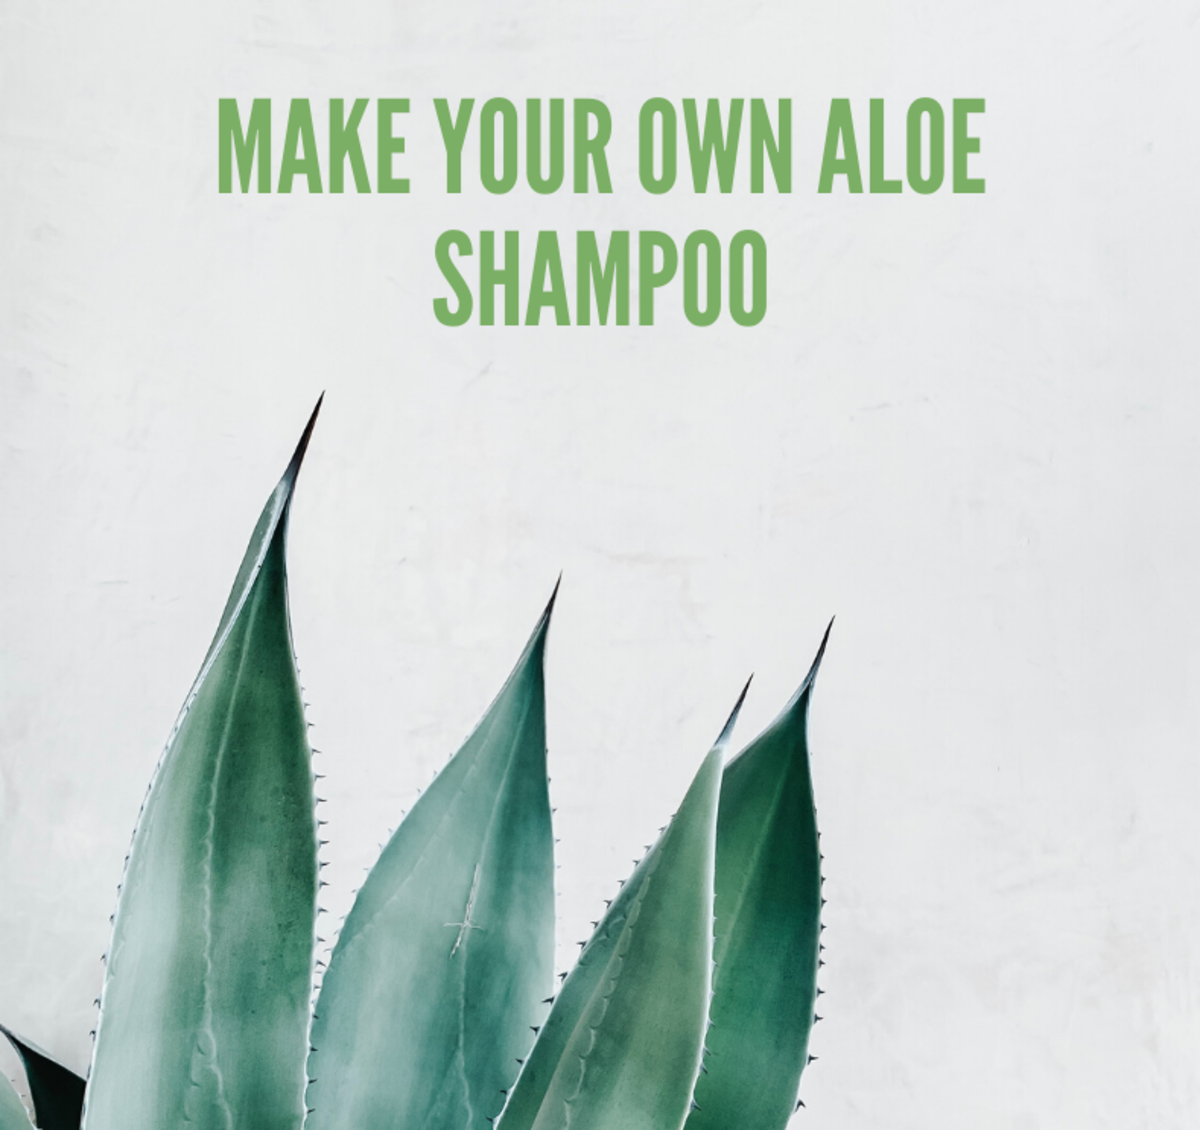 Aloe Vera Shampoo Recipe: Make Your Own